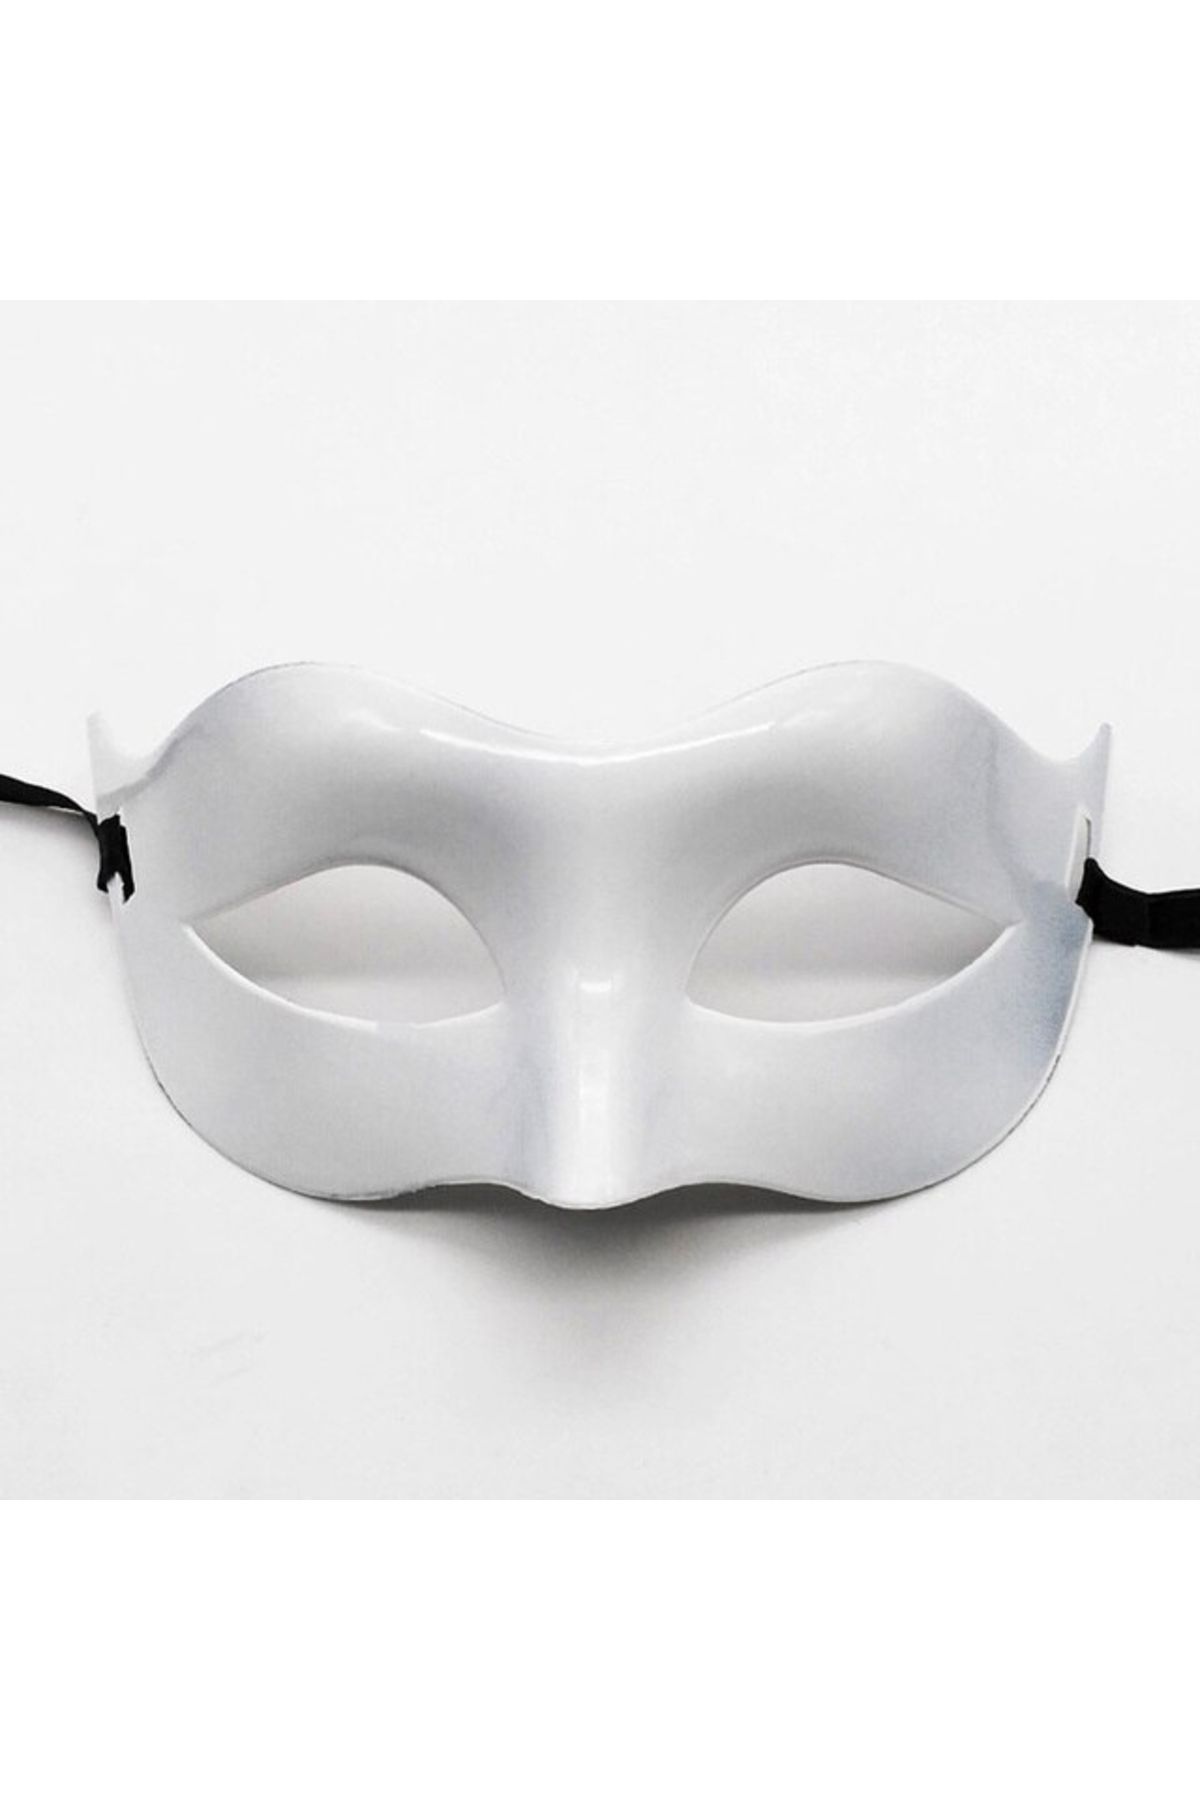 ERTEN Beyaz Renk Masquerade Kostüm Partisi Venedik Balo Maskesi (4352)